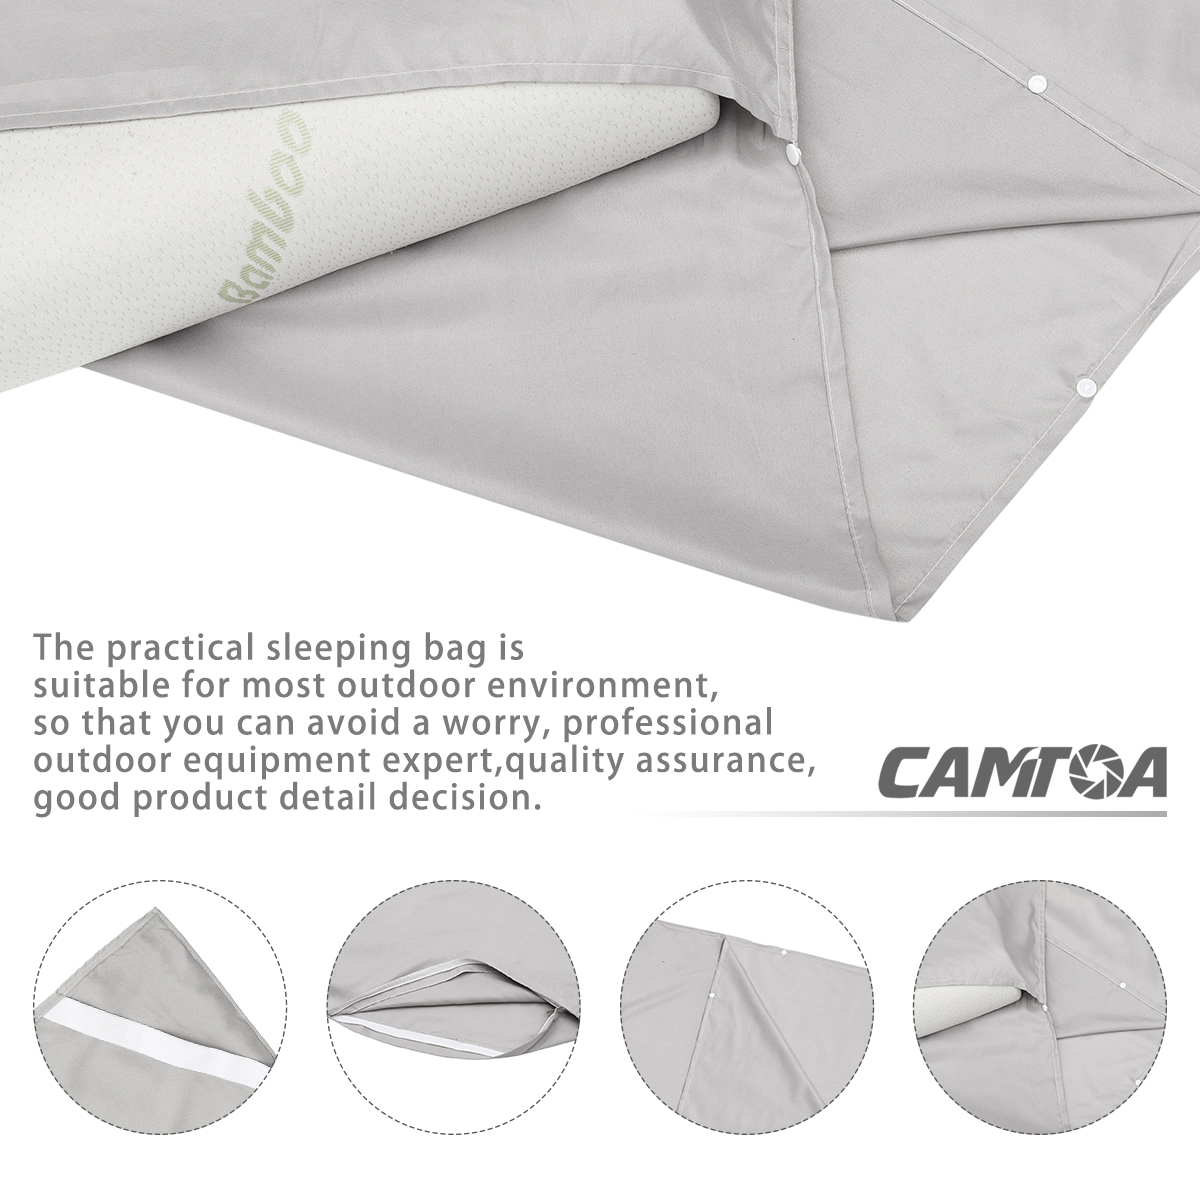 Portable-Sleeping-Bag-Cover-Ultralight-Sleep-Sheet-Outdoor-Camping-Hiking-Travel-Bag-1883995-4